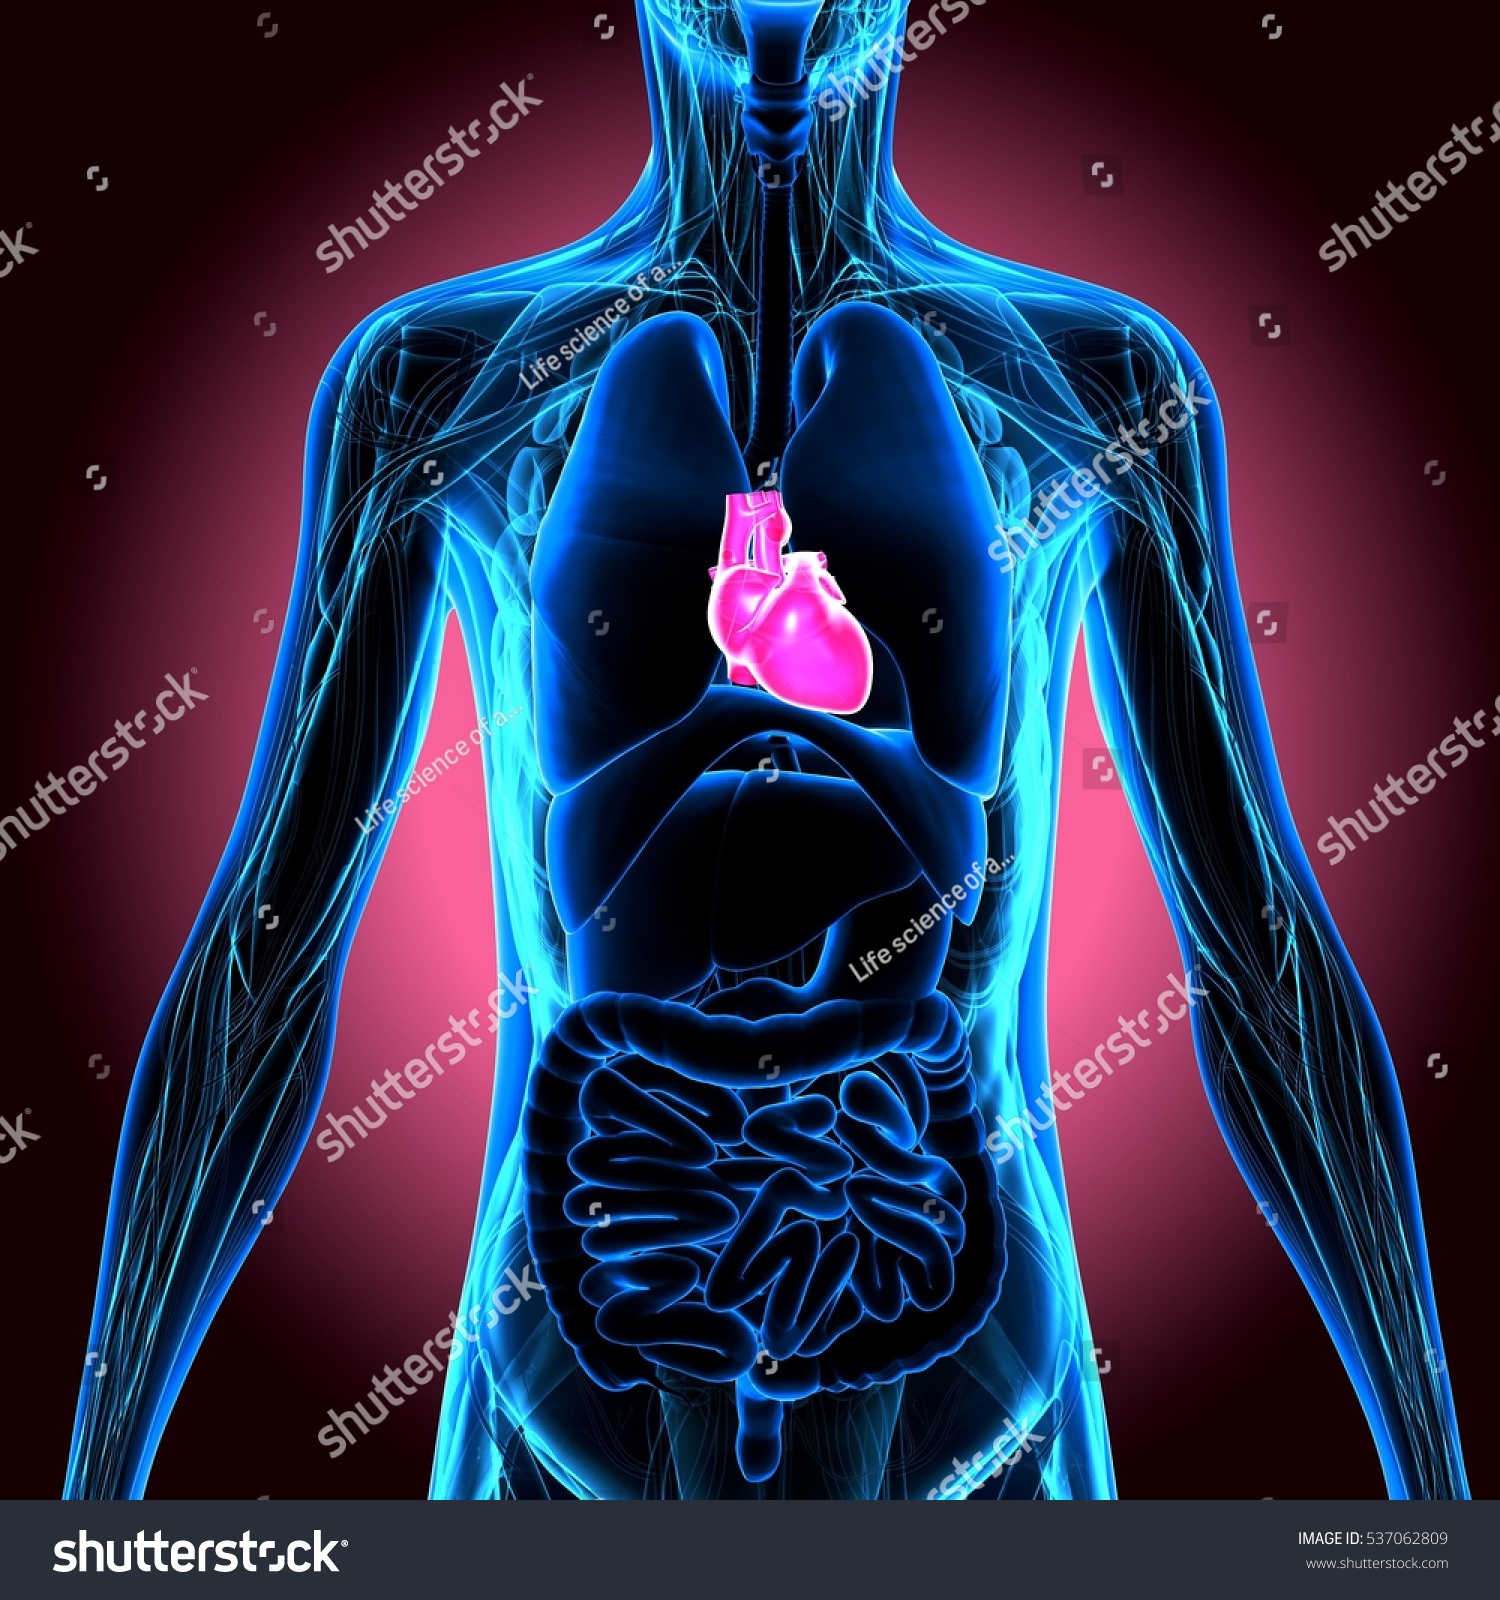 3d Illustration Human Body Heart - 537062809 : Shutterstock